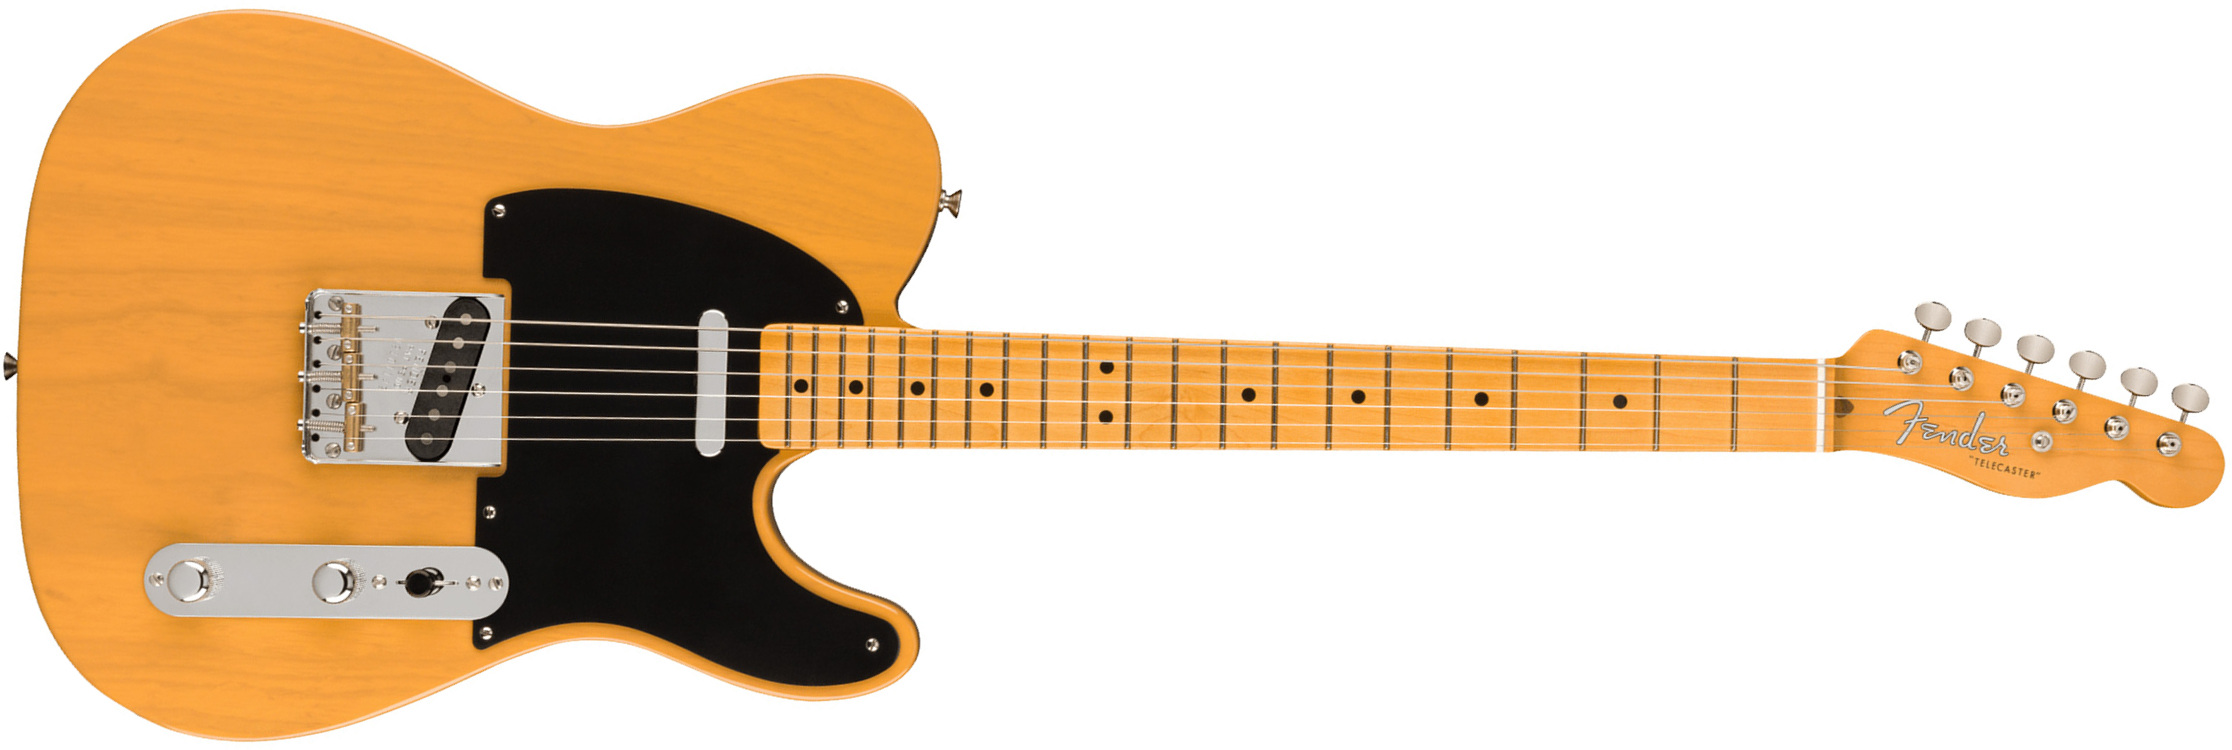 Fender Tele 1951 American Vintage Ii Usa 2s Ht Mn - Butterscotch Blonde - Tel shape electric guitar - Main picture